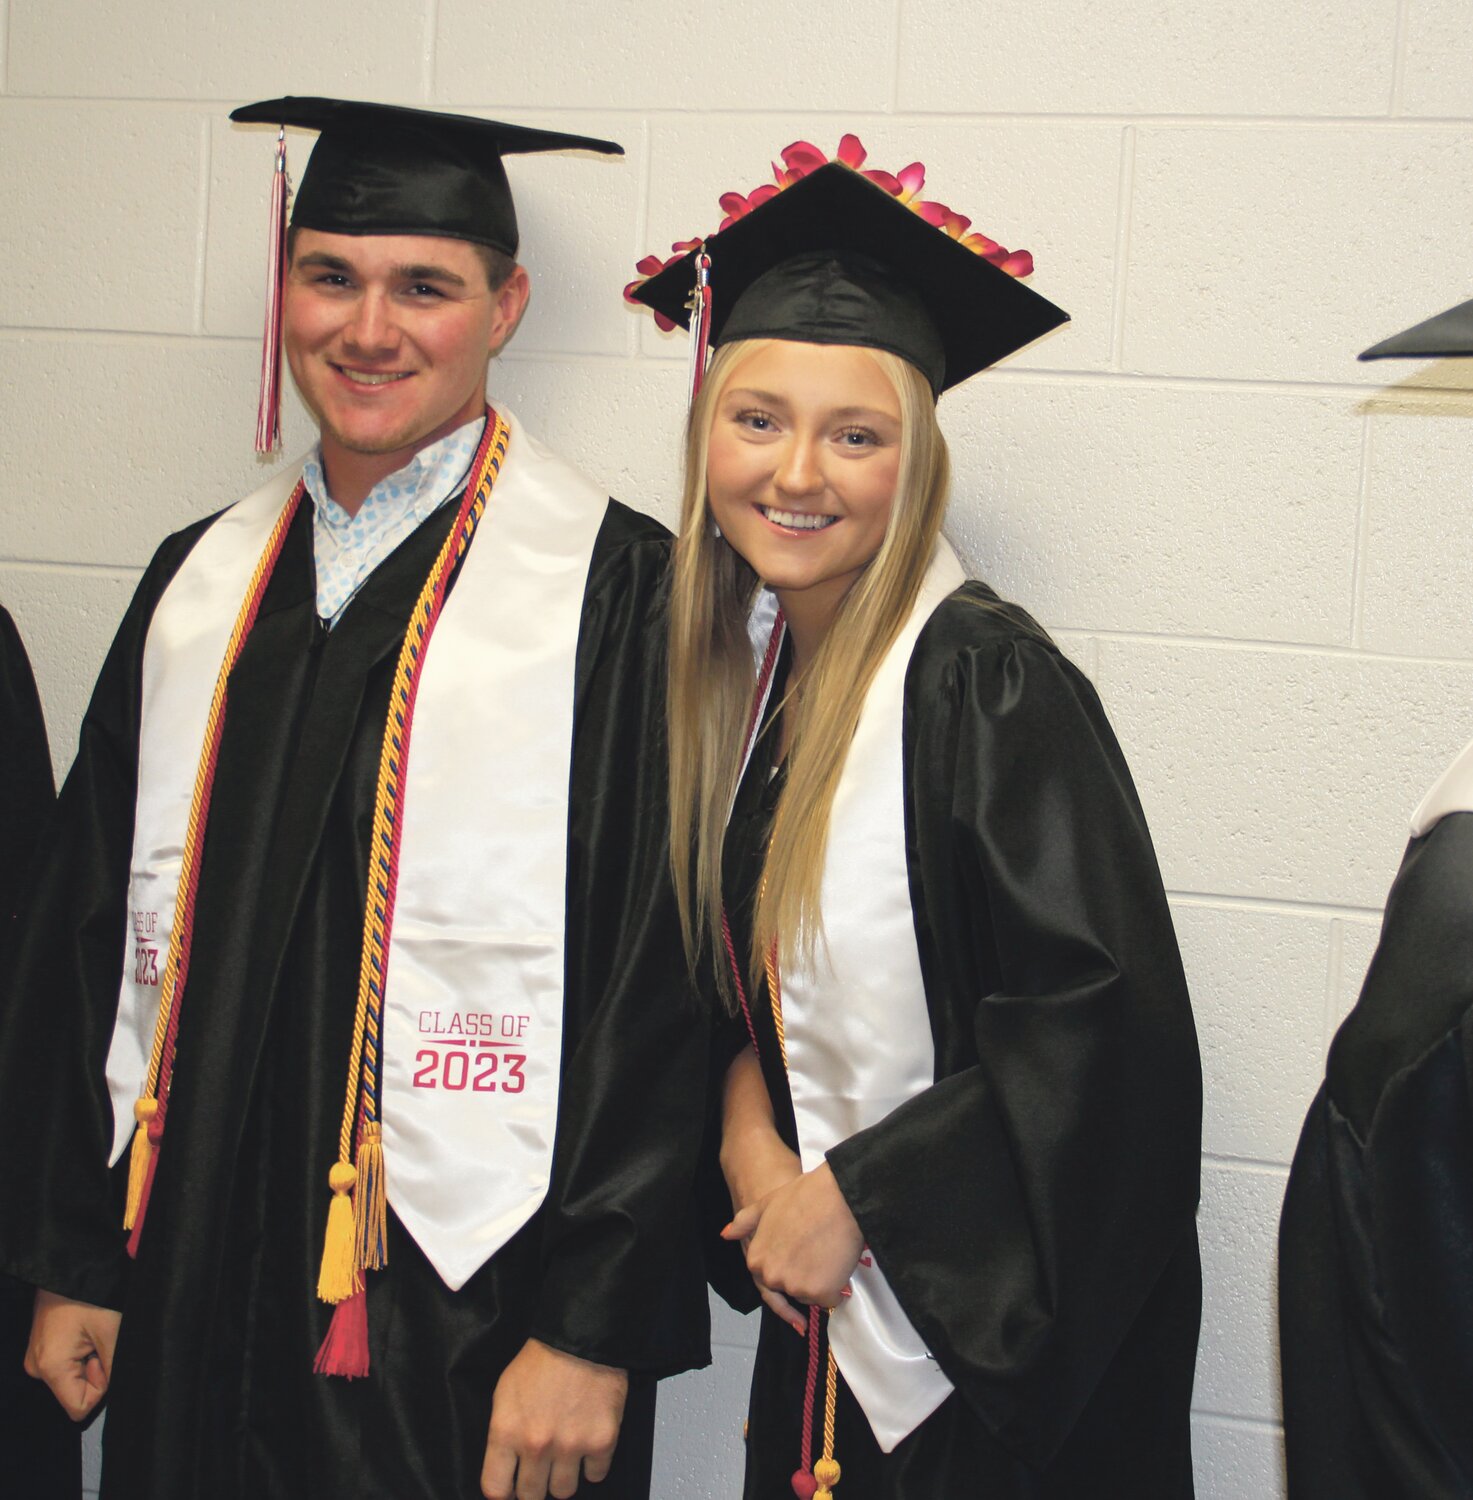 LCR Photo/Beth Durreman
Caleb Graves and Kaytlin Myers pose for a photo at Conway graduation Saturday.